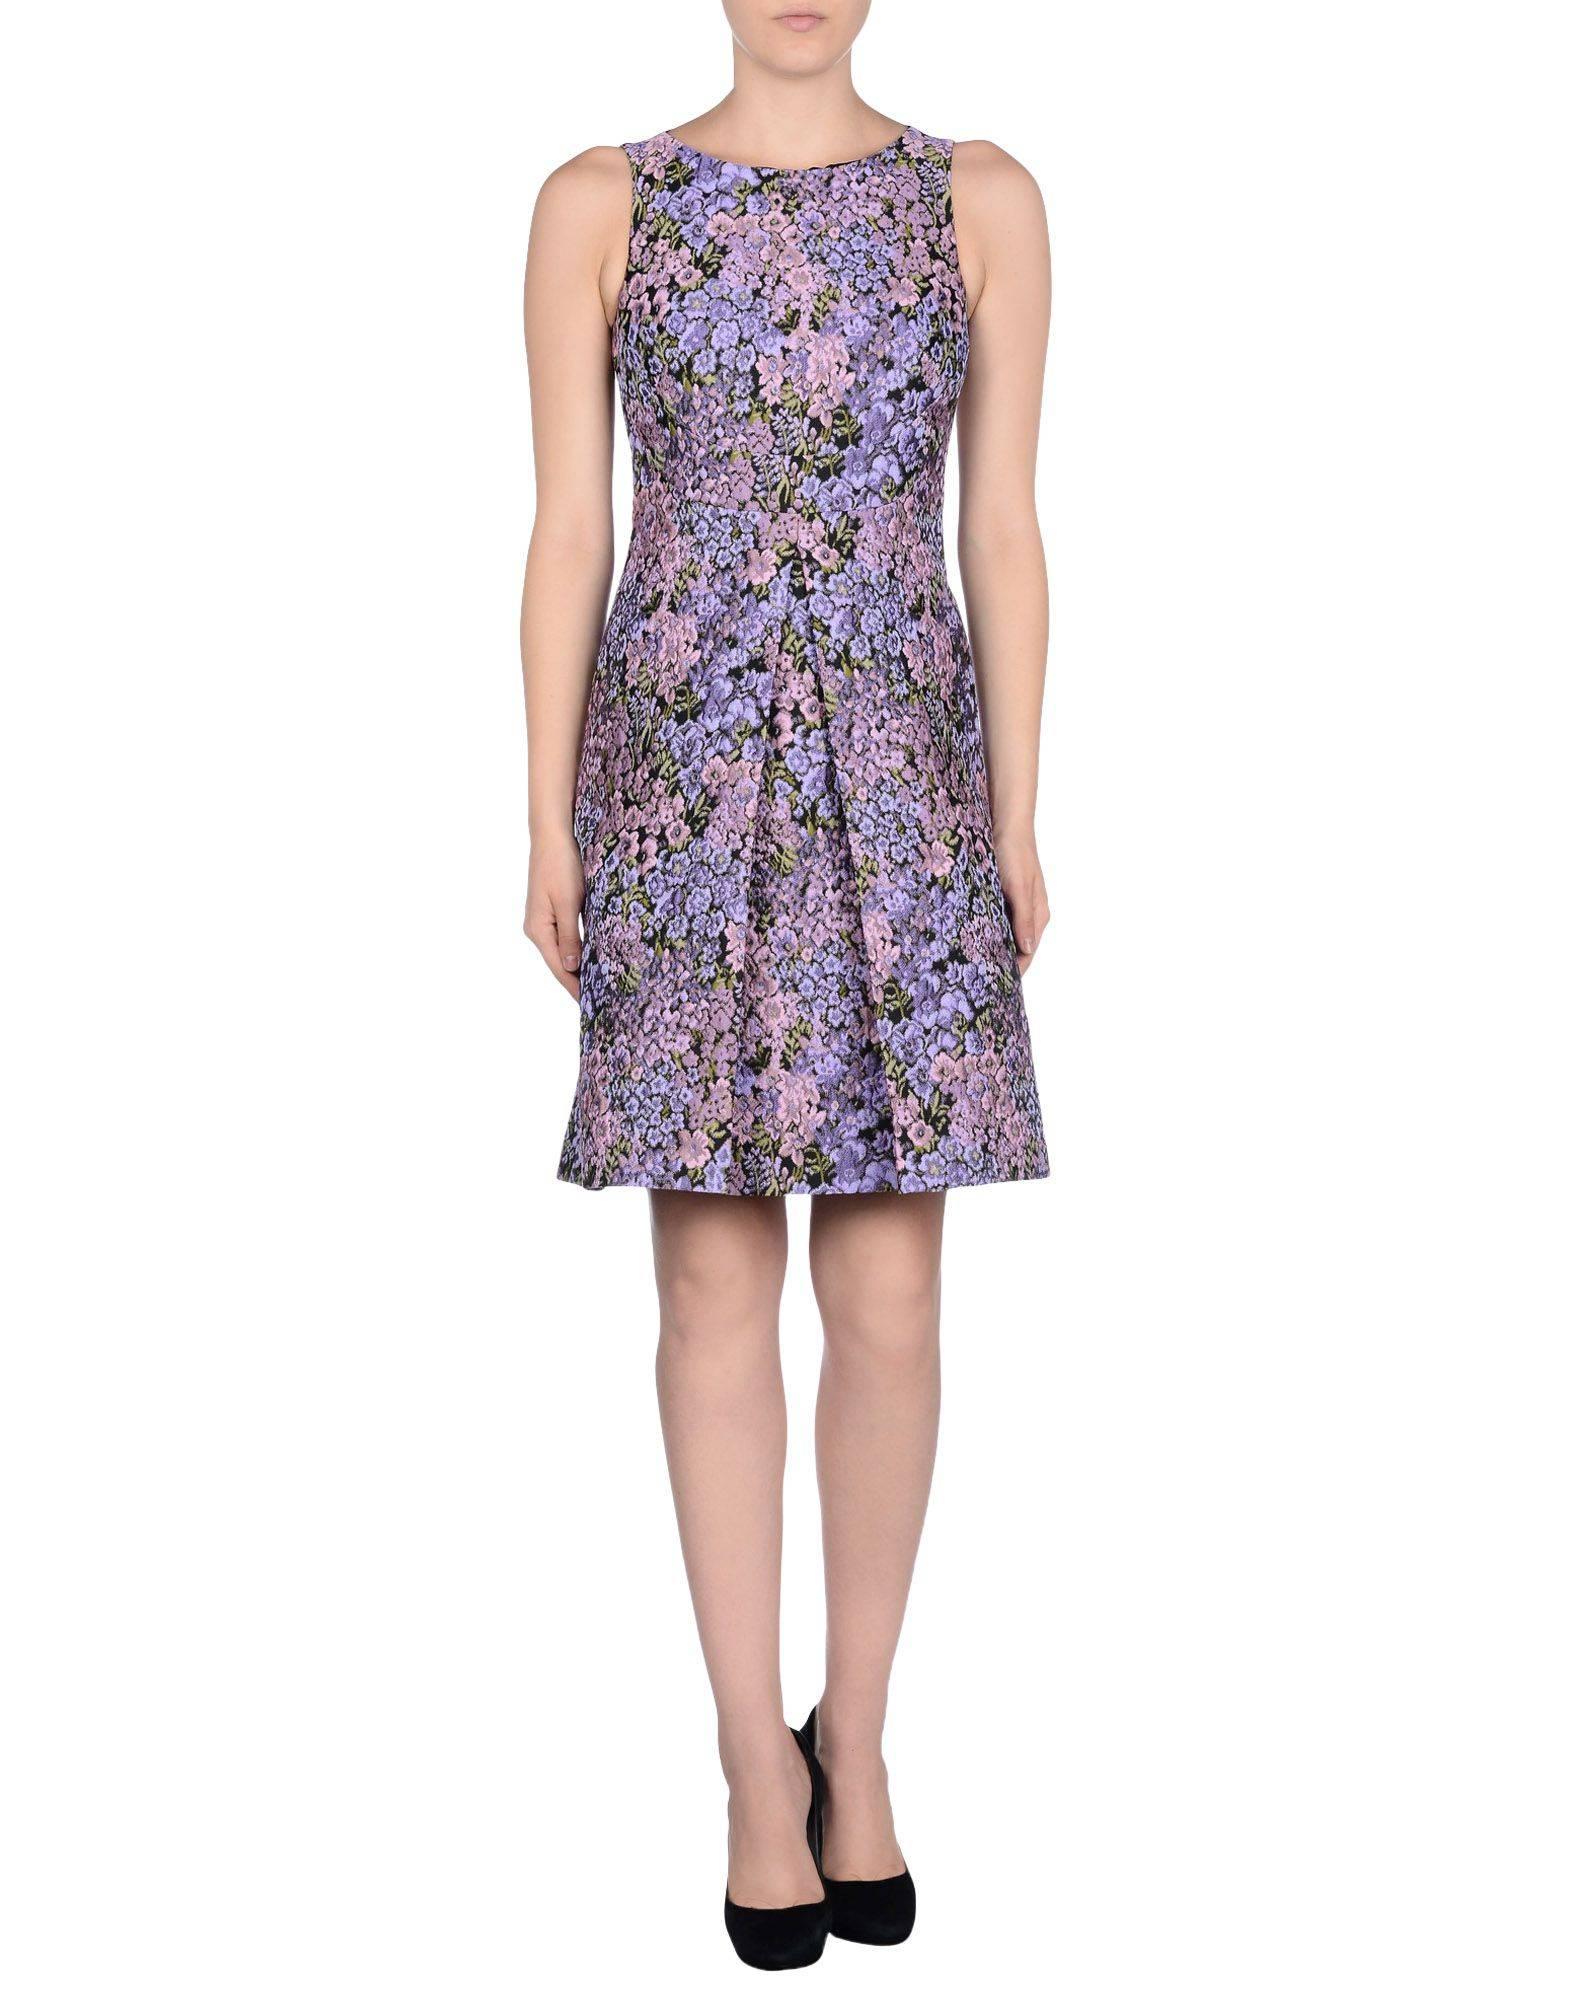 MICHAEL KORS Jacquard Fliederfarbenes Kleid mit Blumenmuster, Größe 12 (Grau) im Angebot